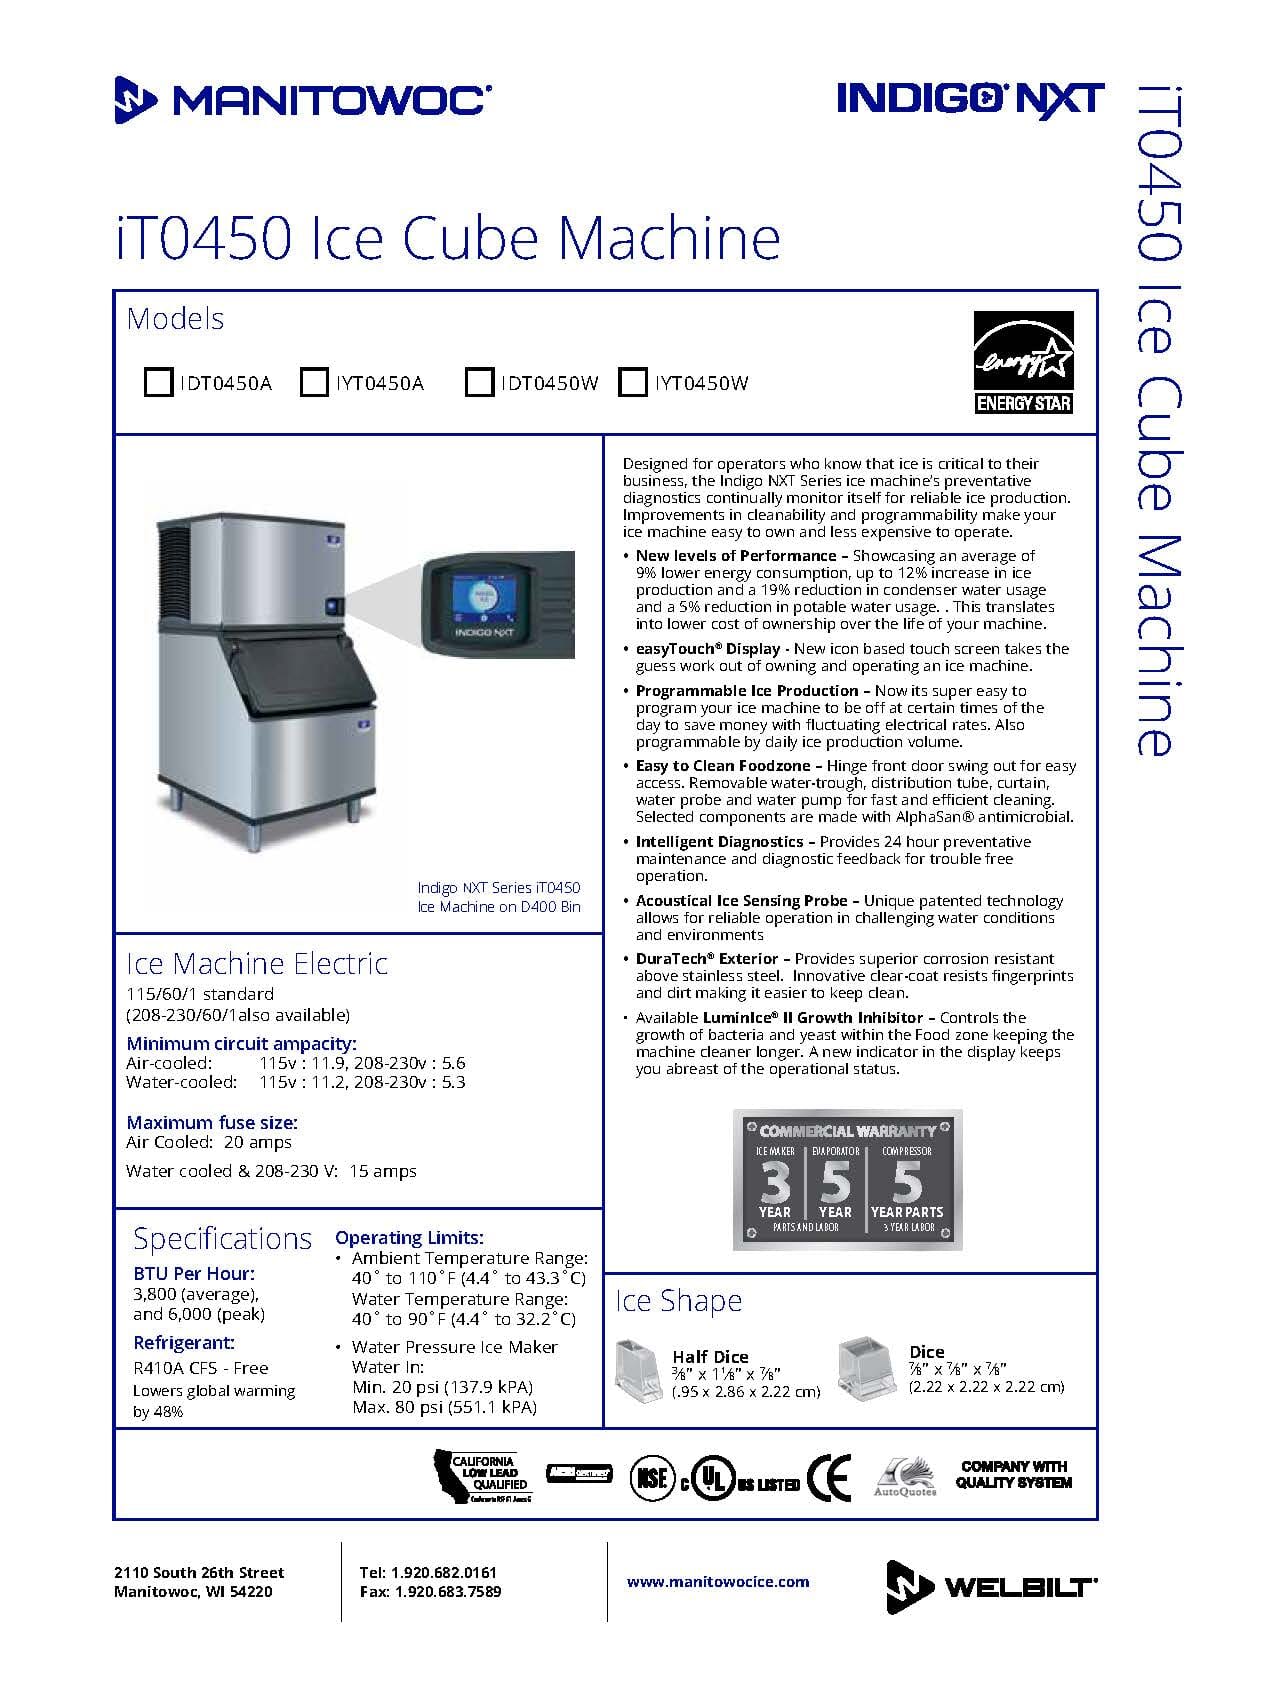 Manitowoc IYT0450A Indigo NXT 30" 490lb Air Cooled Half Dice Ice Machine Manitowoc 